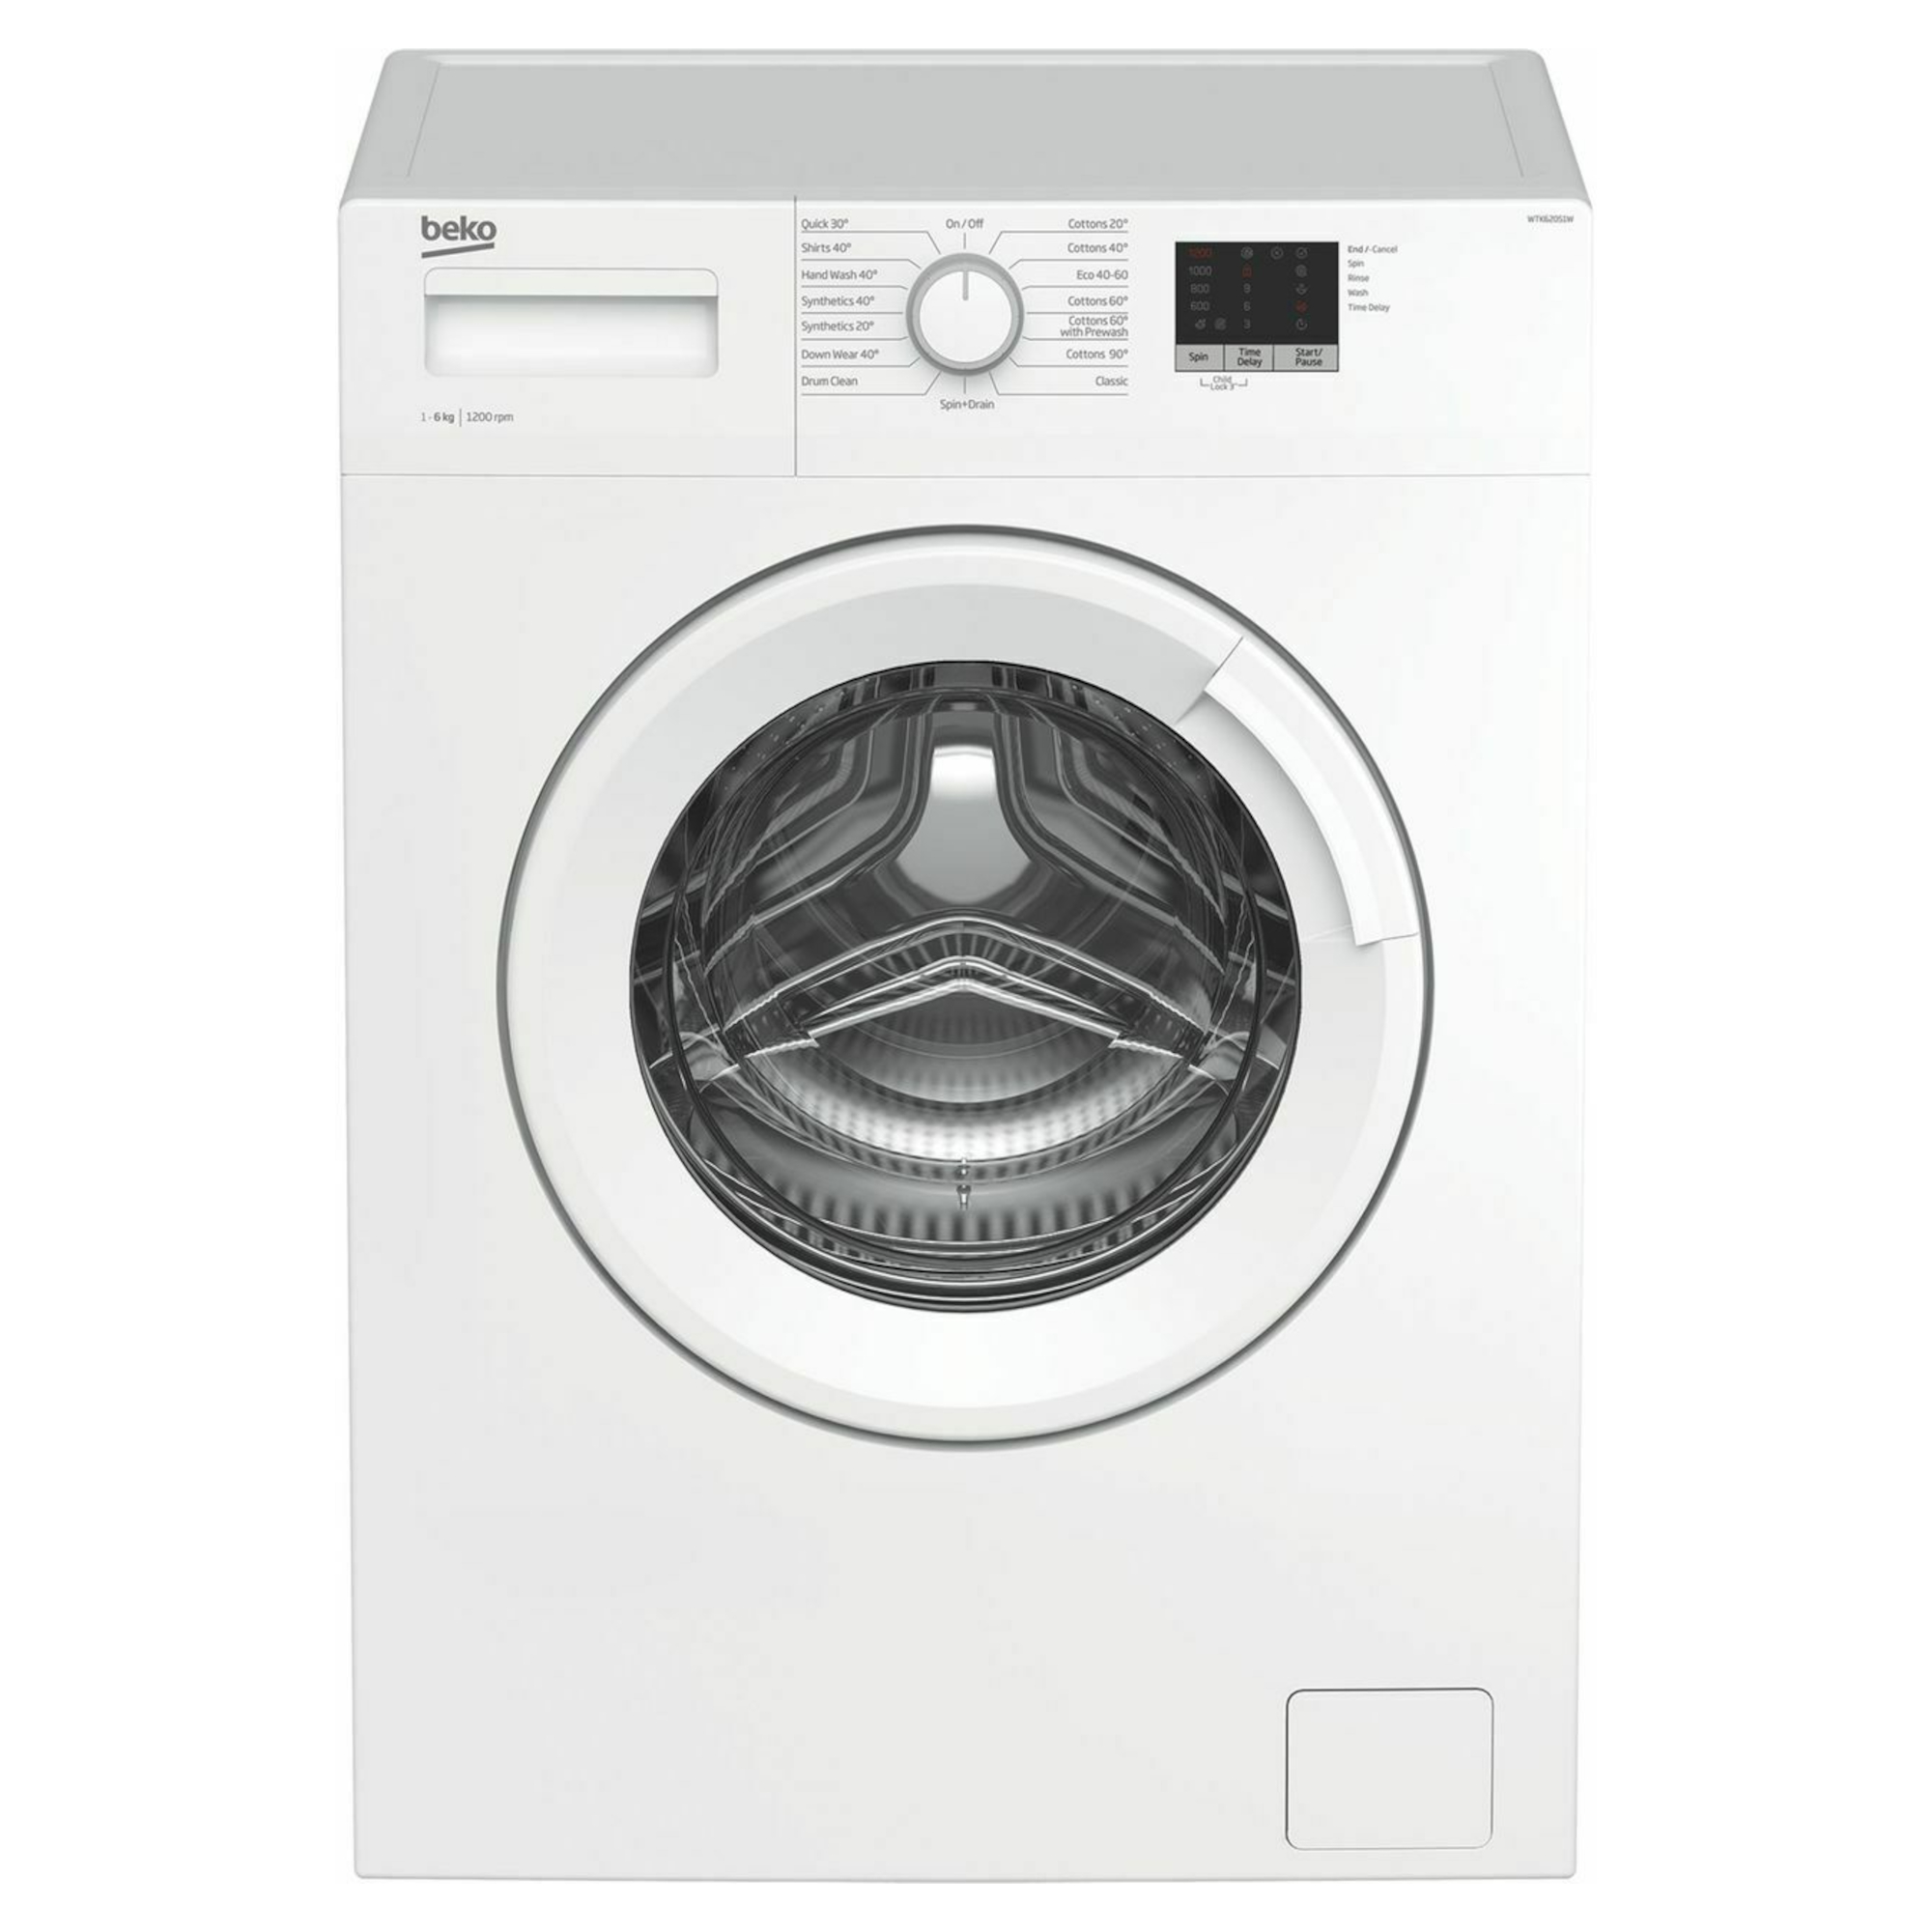 Beko WTK62051W washing machine